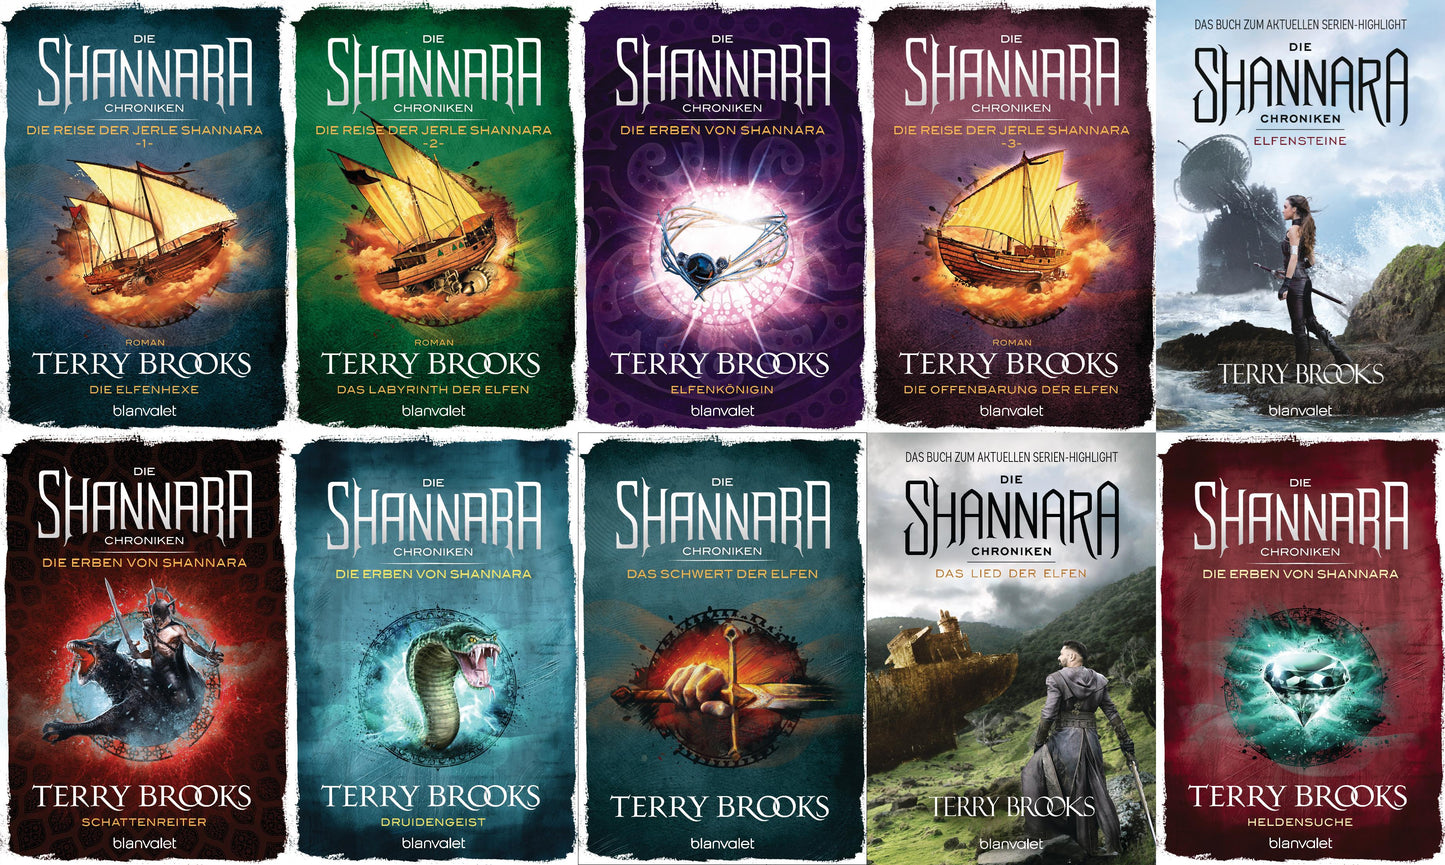 Konvolut Shannara-Chroniken von Terry Brooks plus 1 exklusives Postkartenset